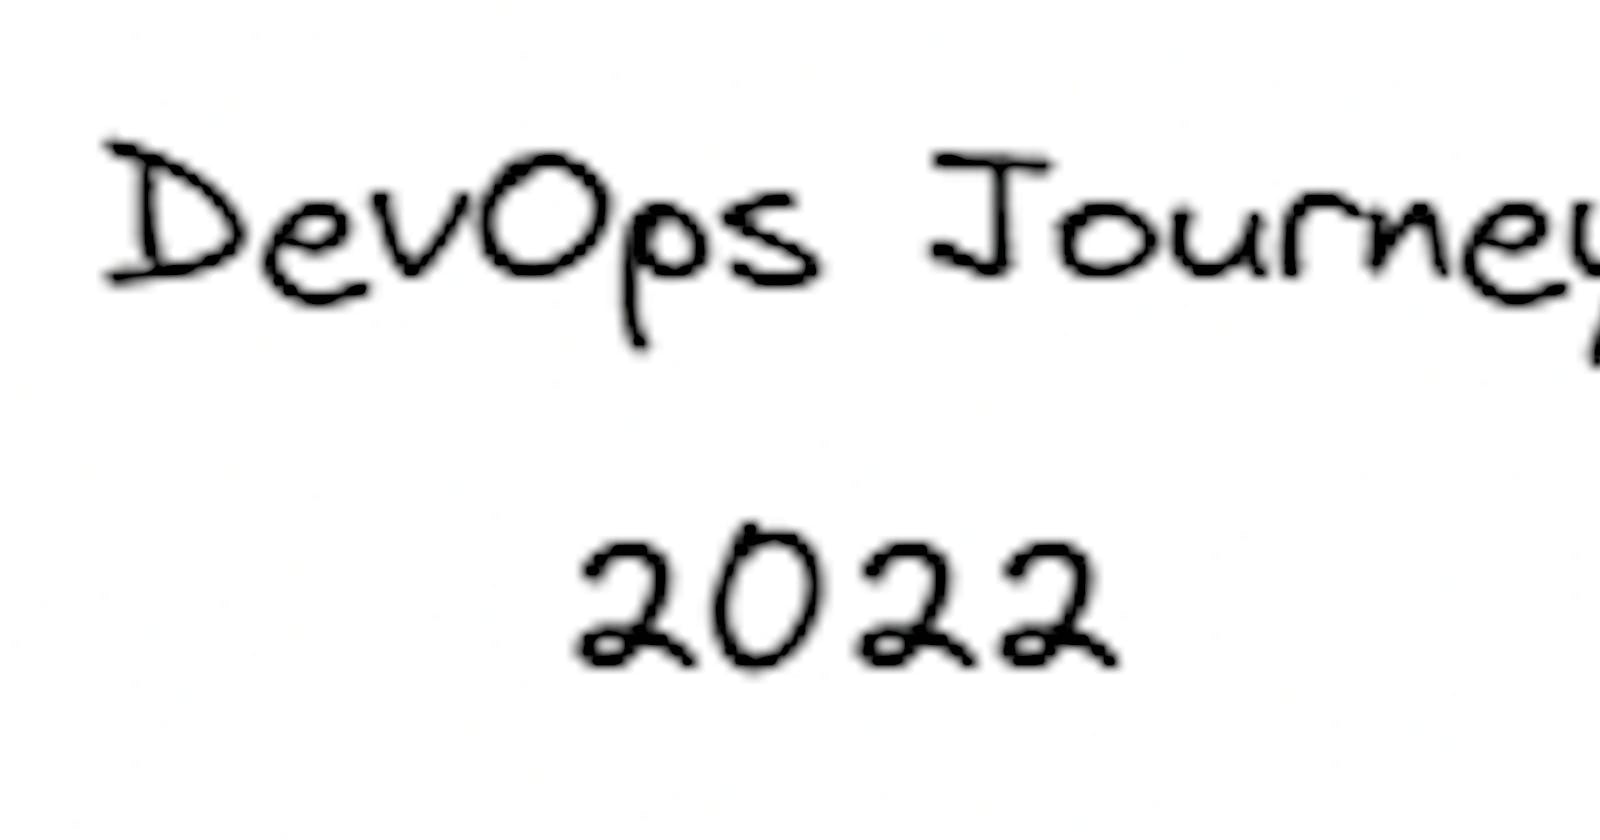 My DevOps journey so far - 2022